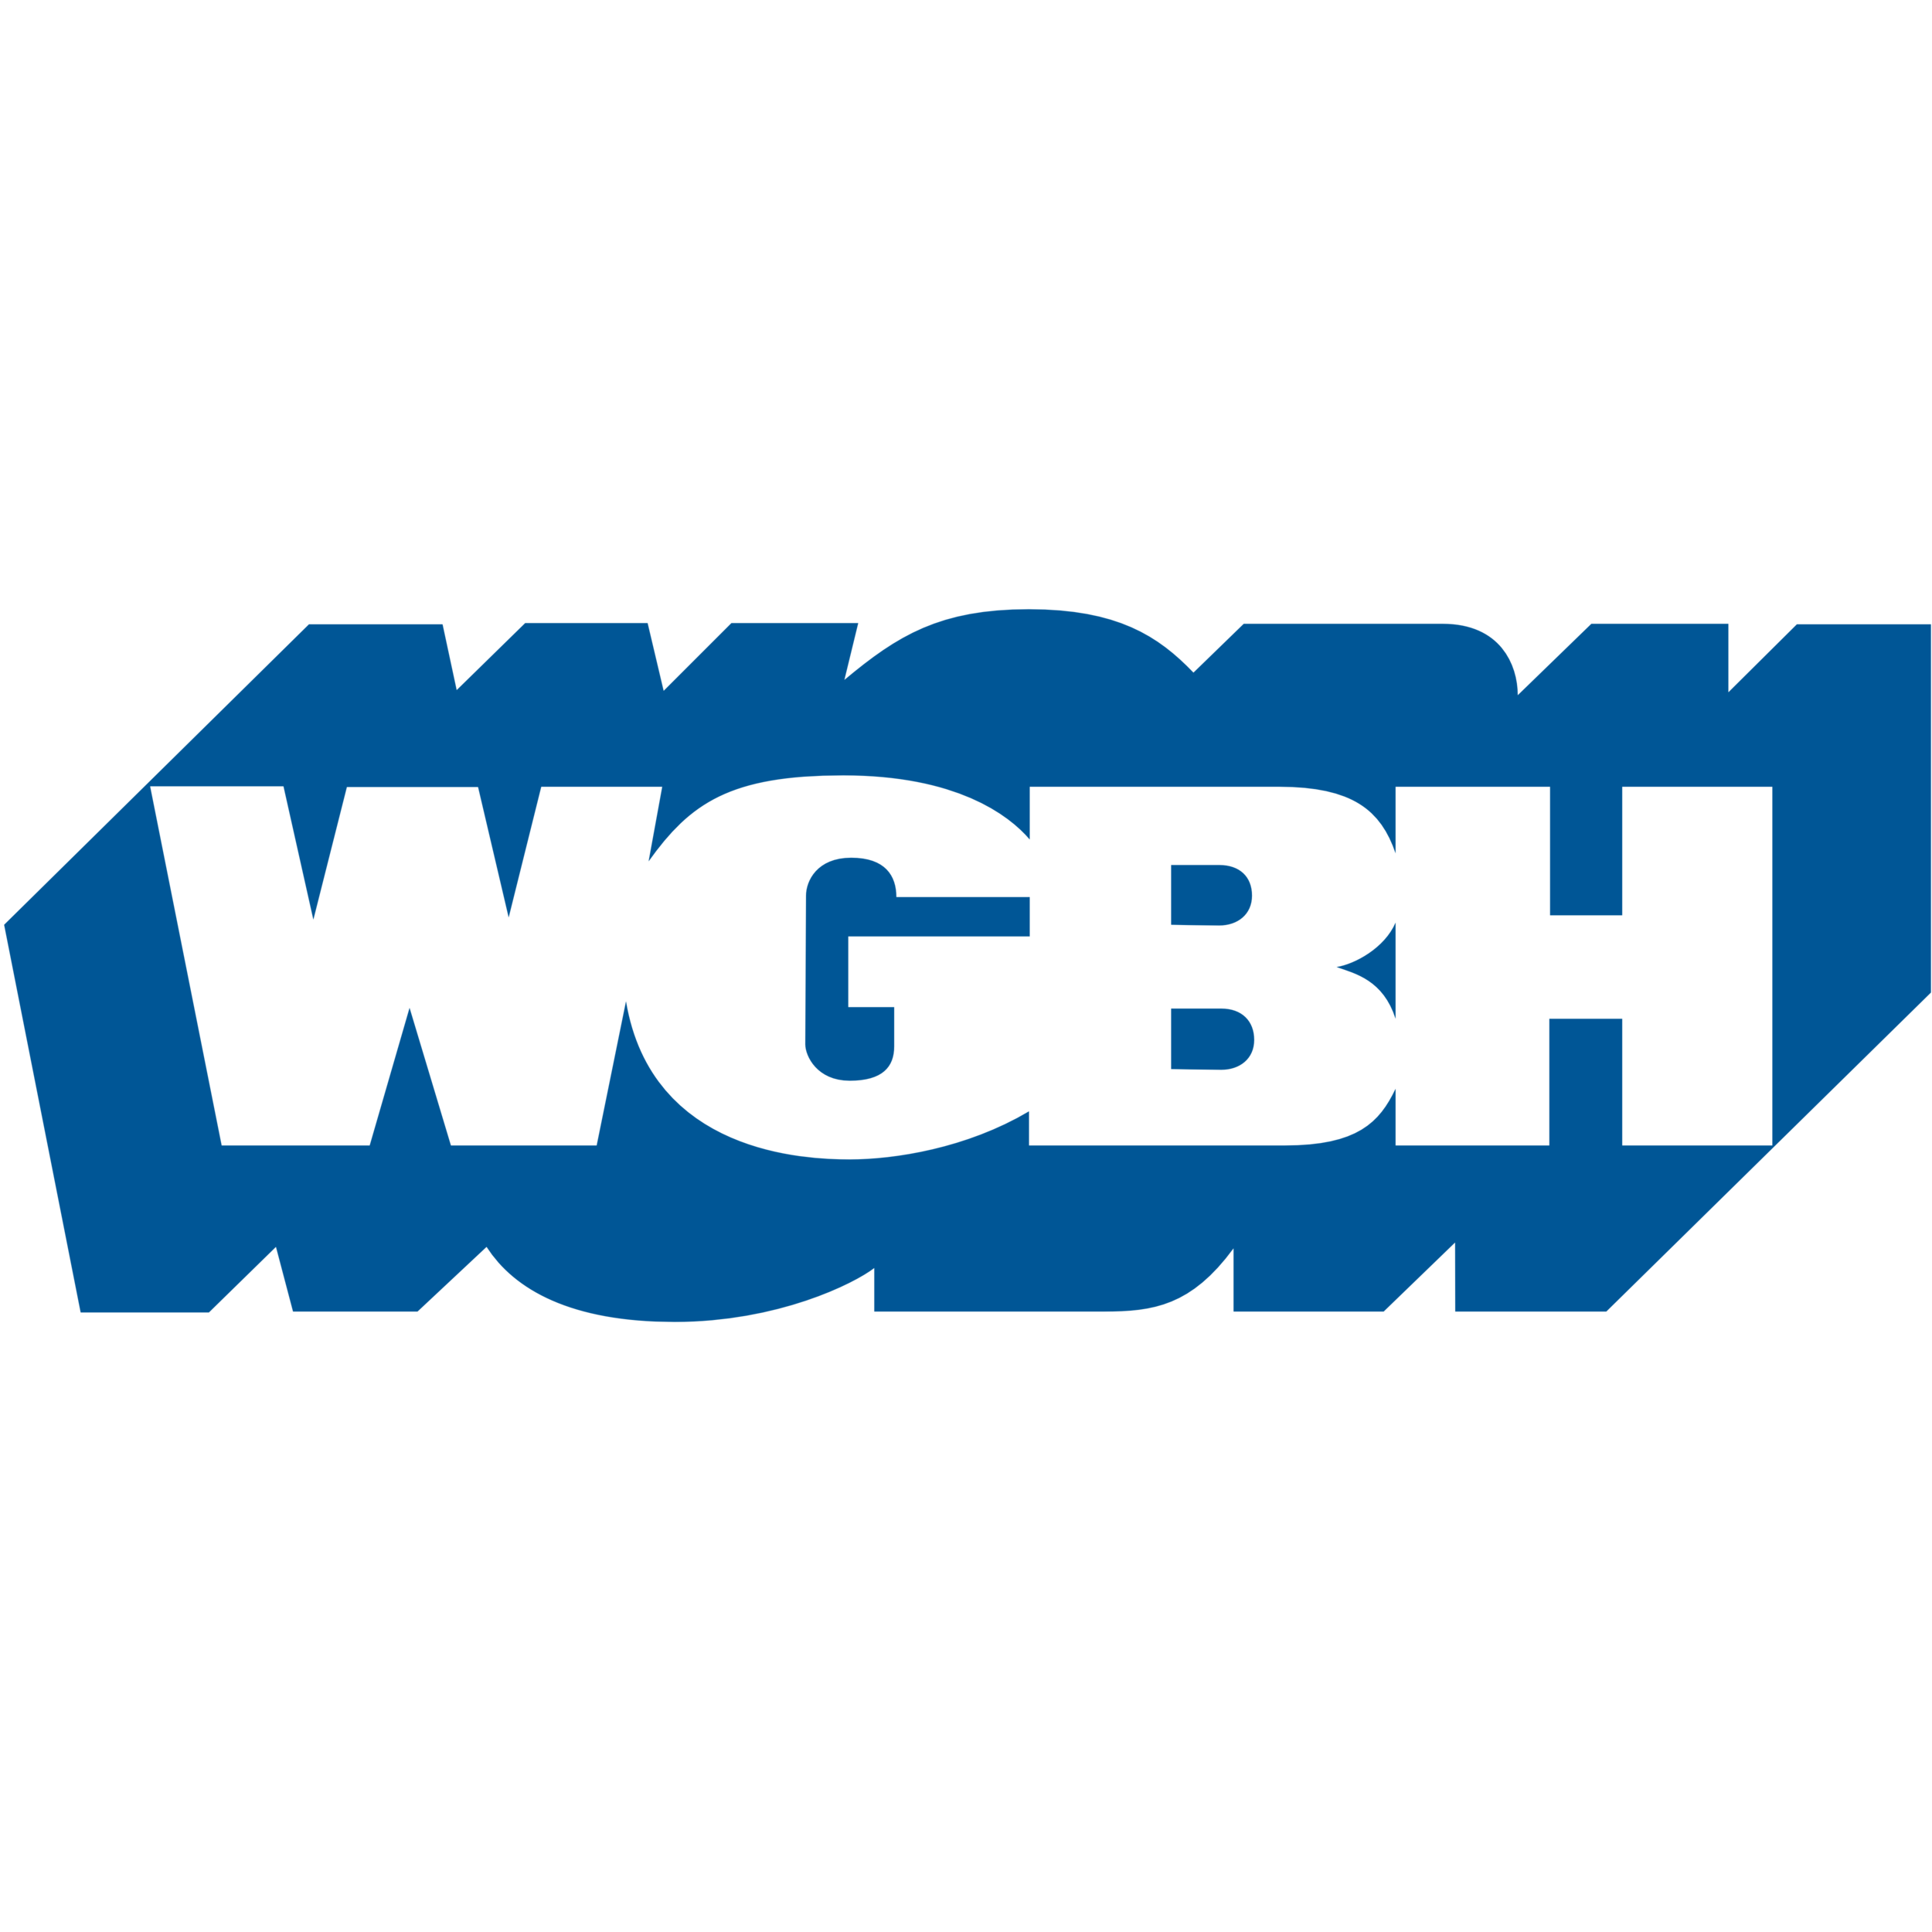 WGBH Boston logo